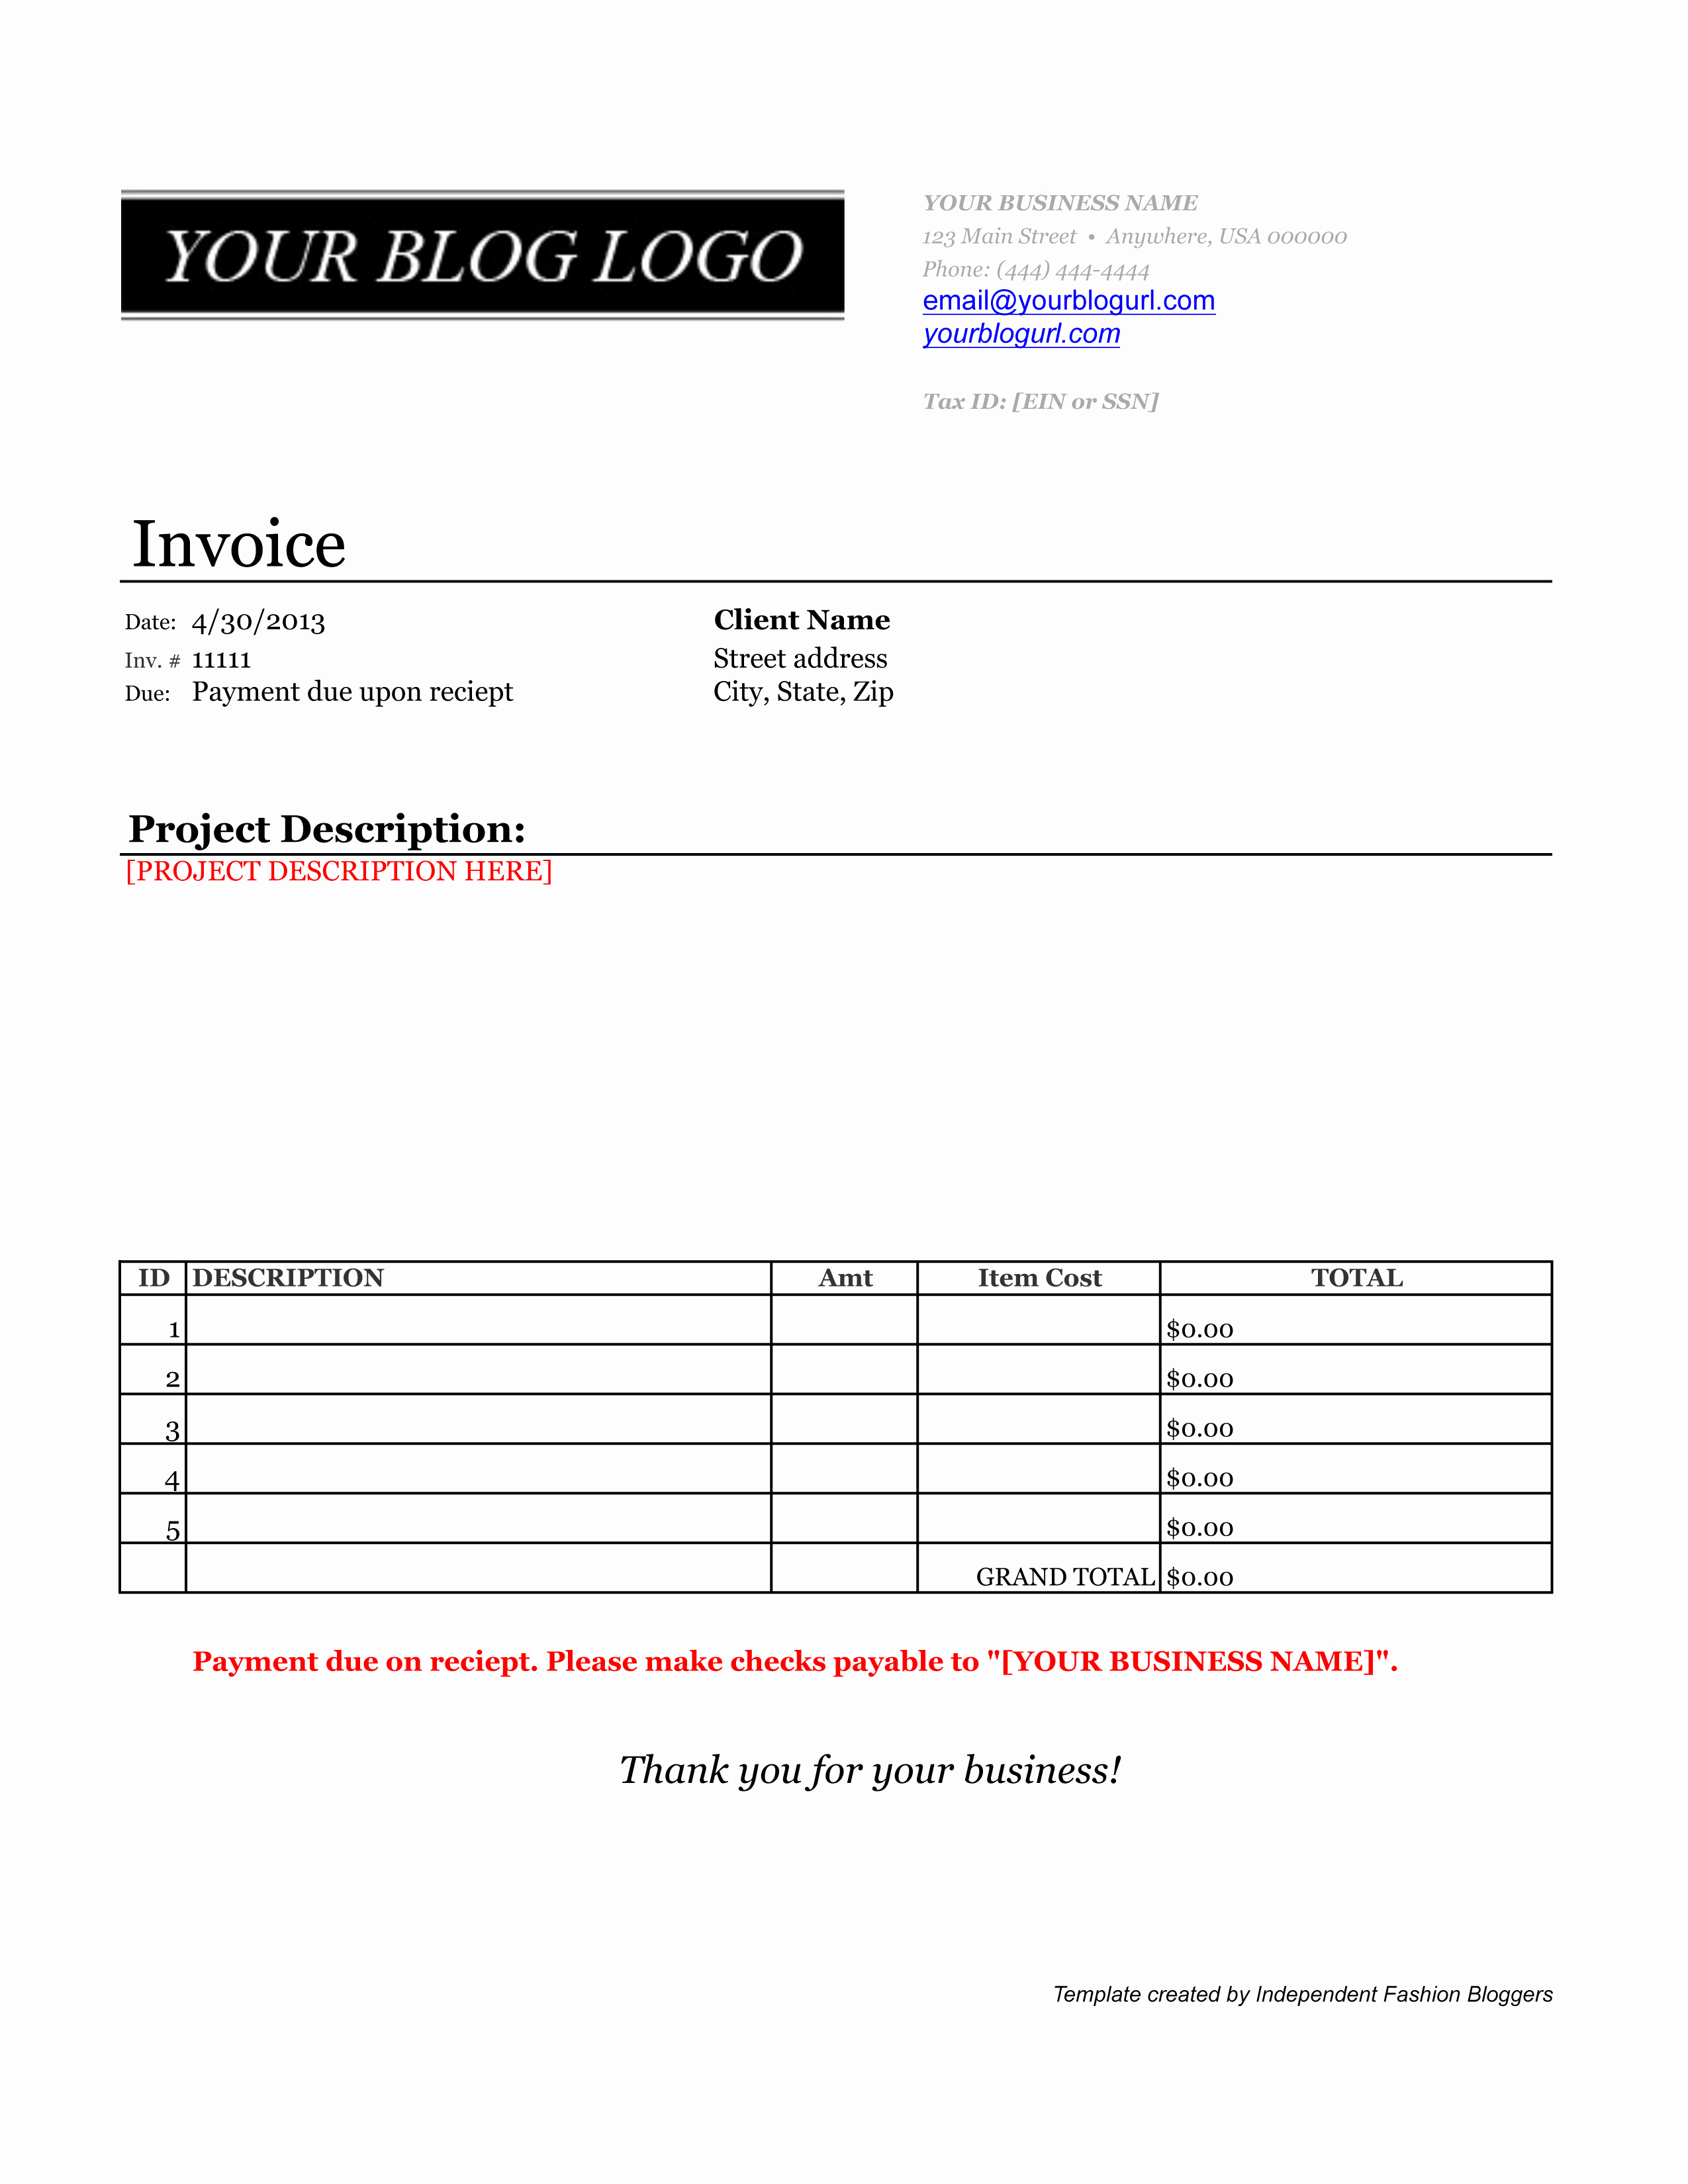 Paid Invoice Receipt Template Inspirational Resumetes Payment Receipt Voucherte Excel Free Word Paid